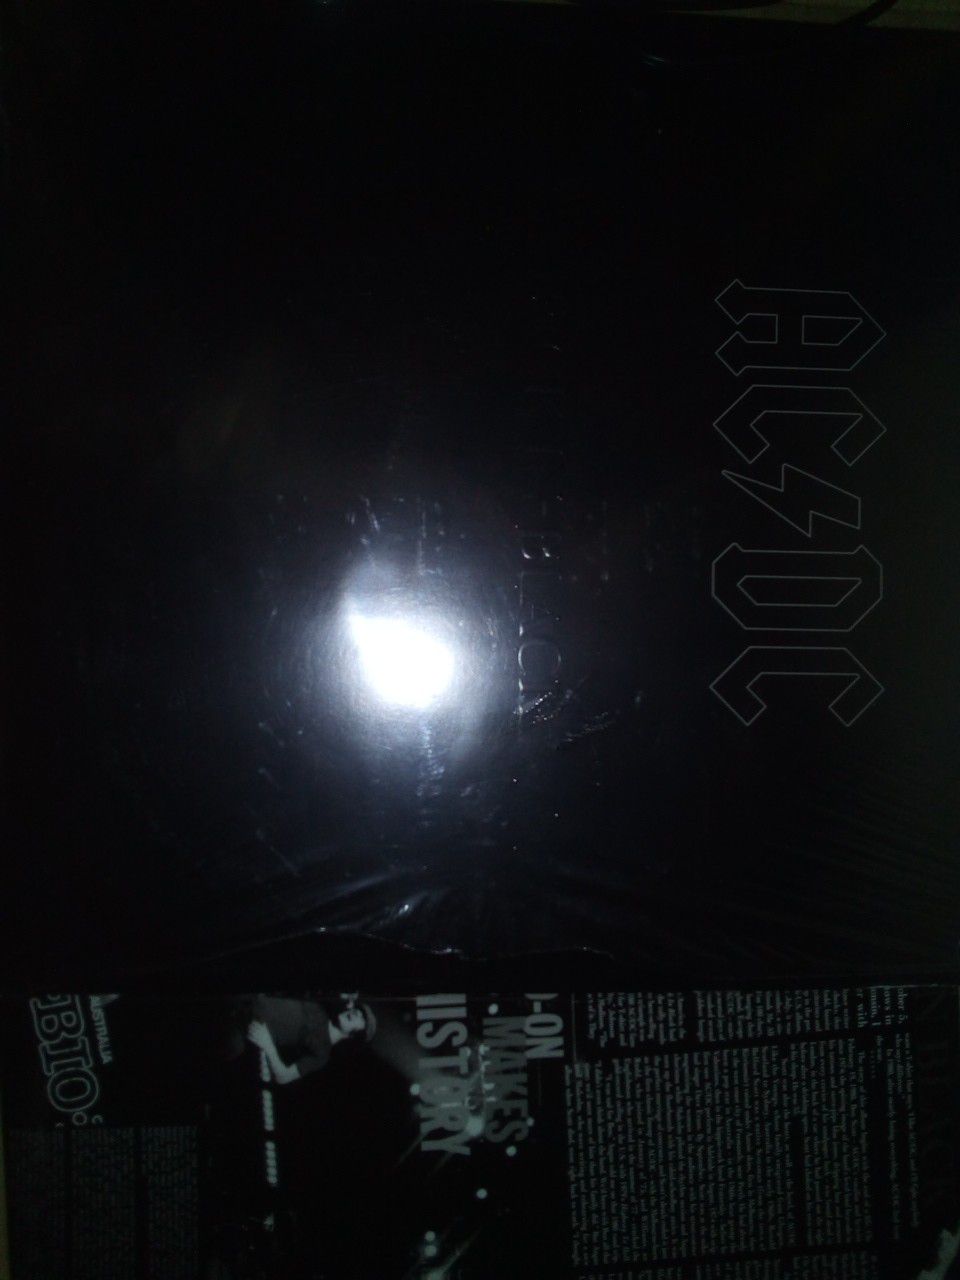 AC/DC back in black vinyl vinyl..